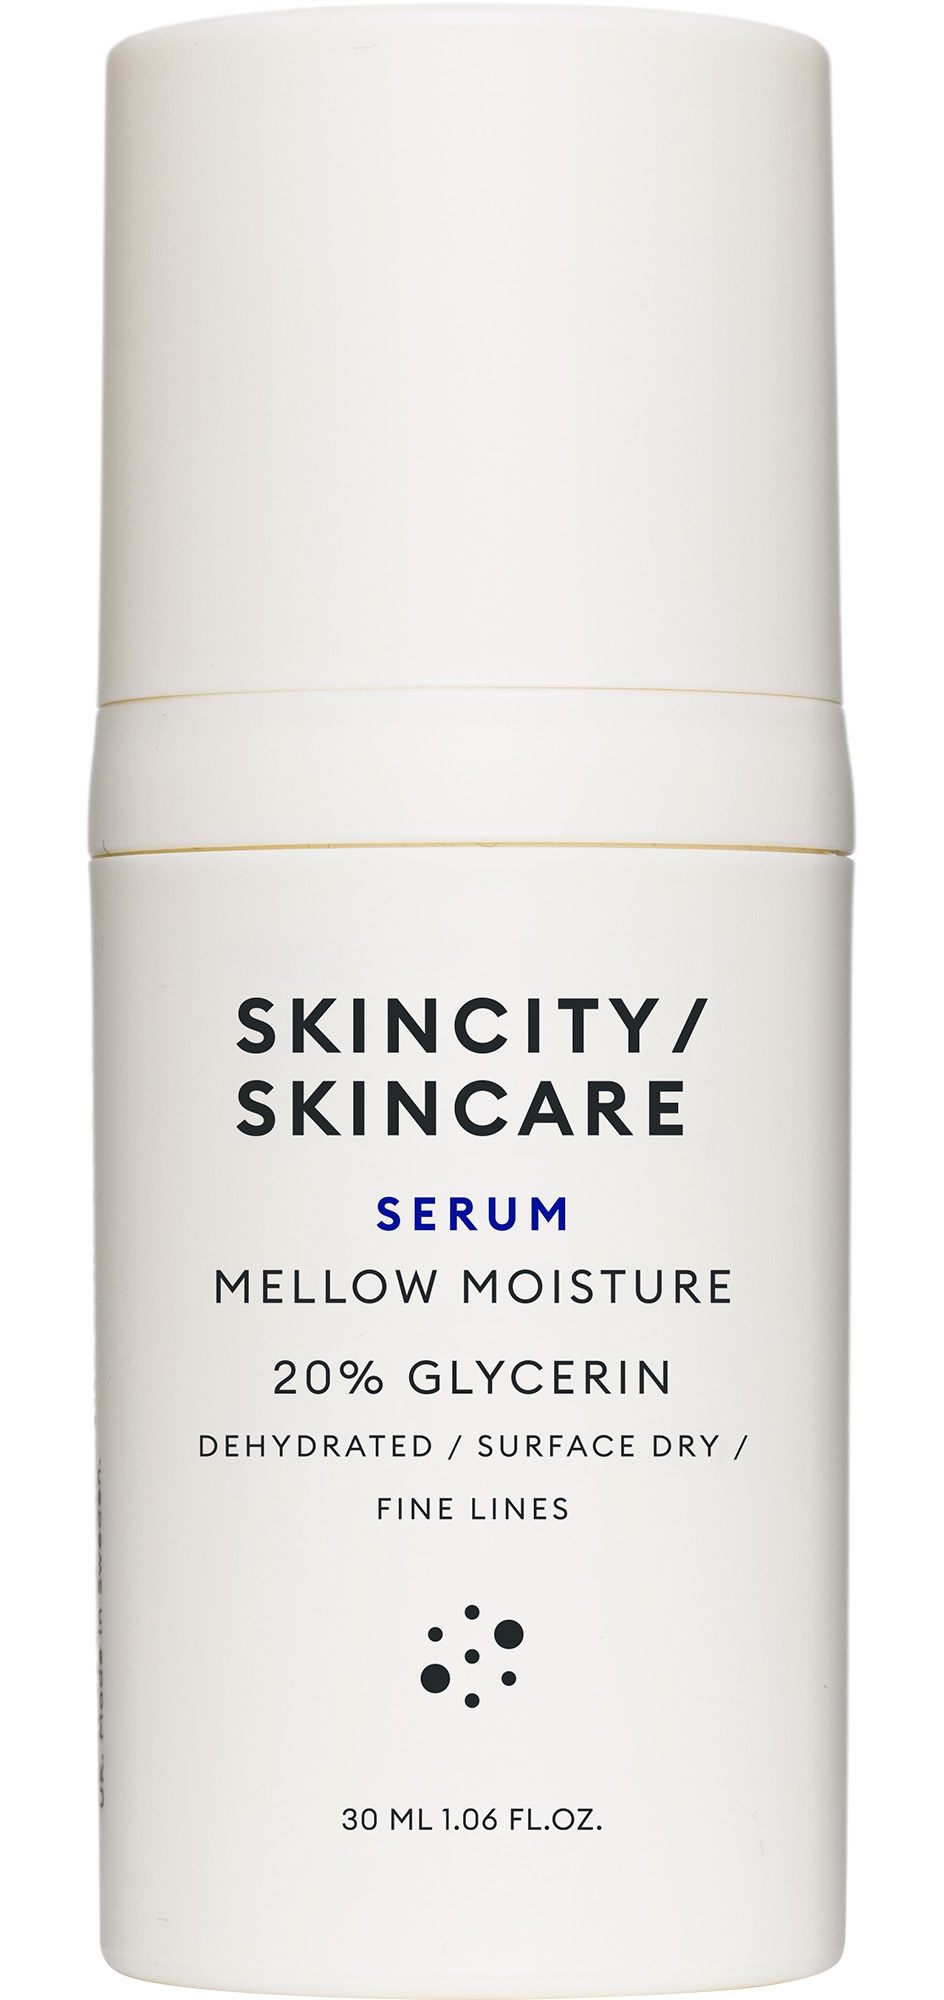 skincity skincare Mellow Moisture 20% Glycerin Serum